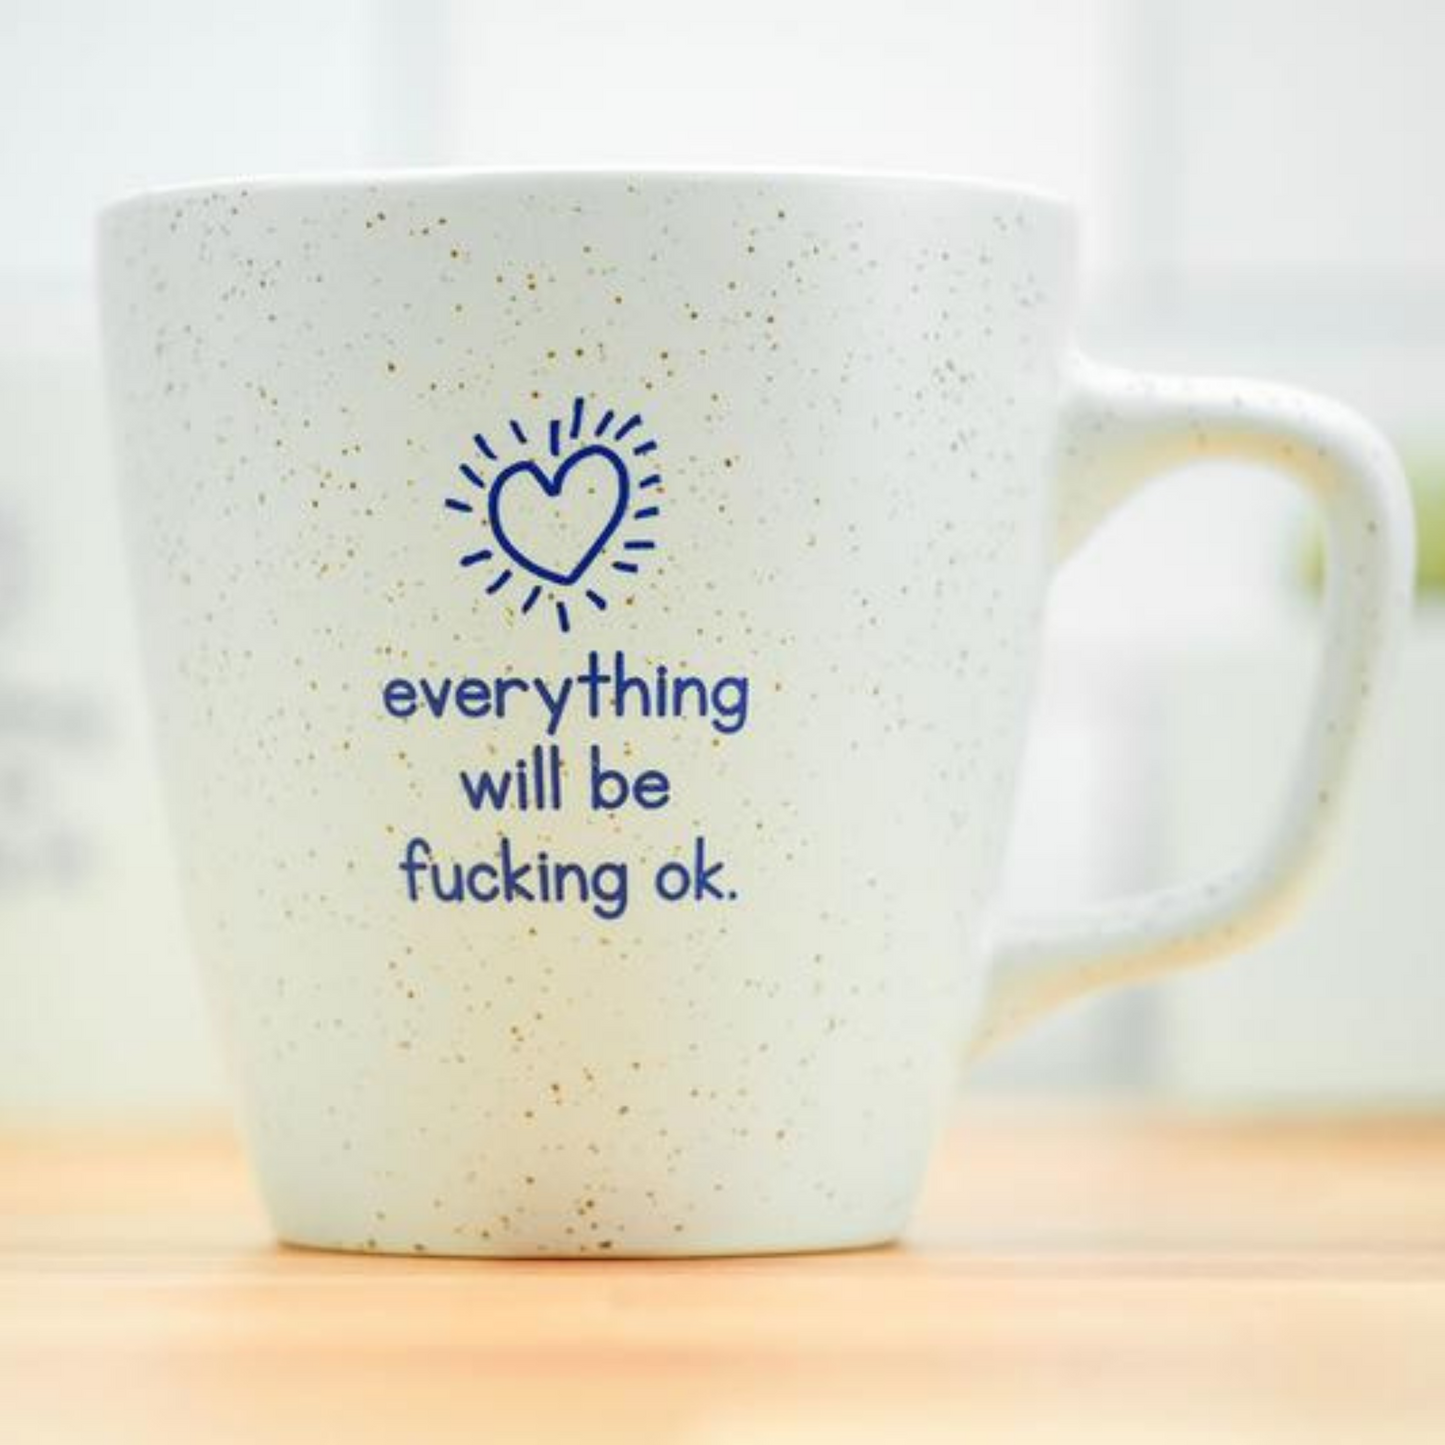 Meriwether Everything Will Be Ok Mug